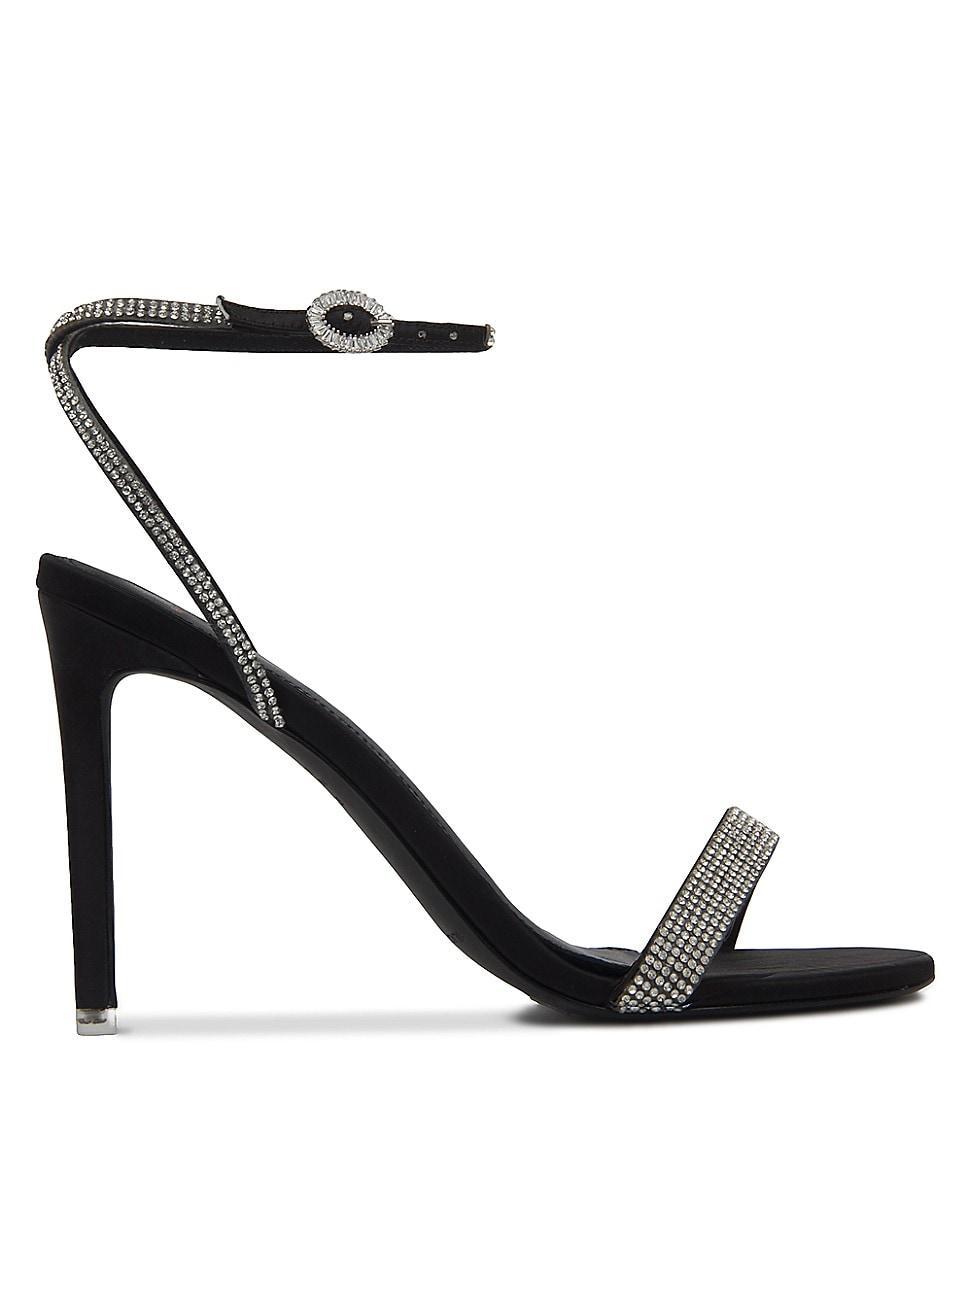 BLACK SUEDE STUDIO Lexi Ankle Strap Sandal Product Image